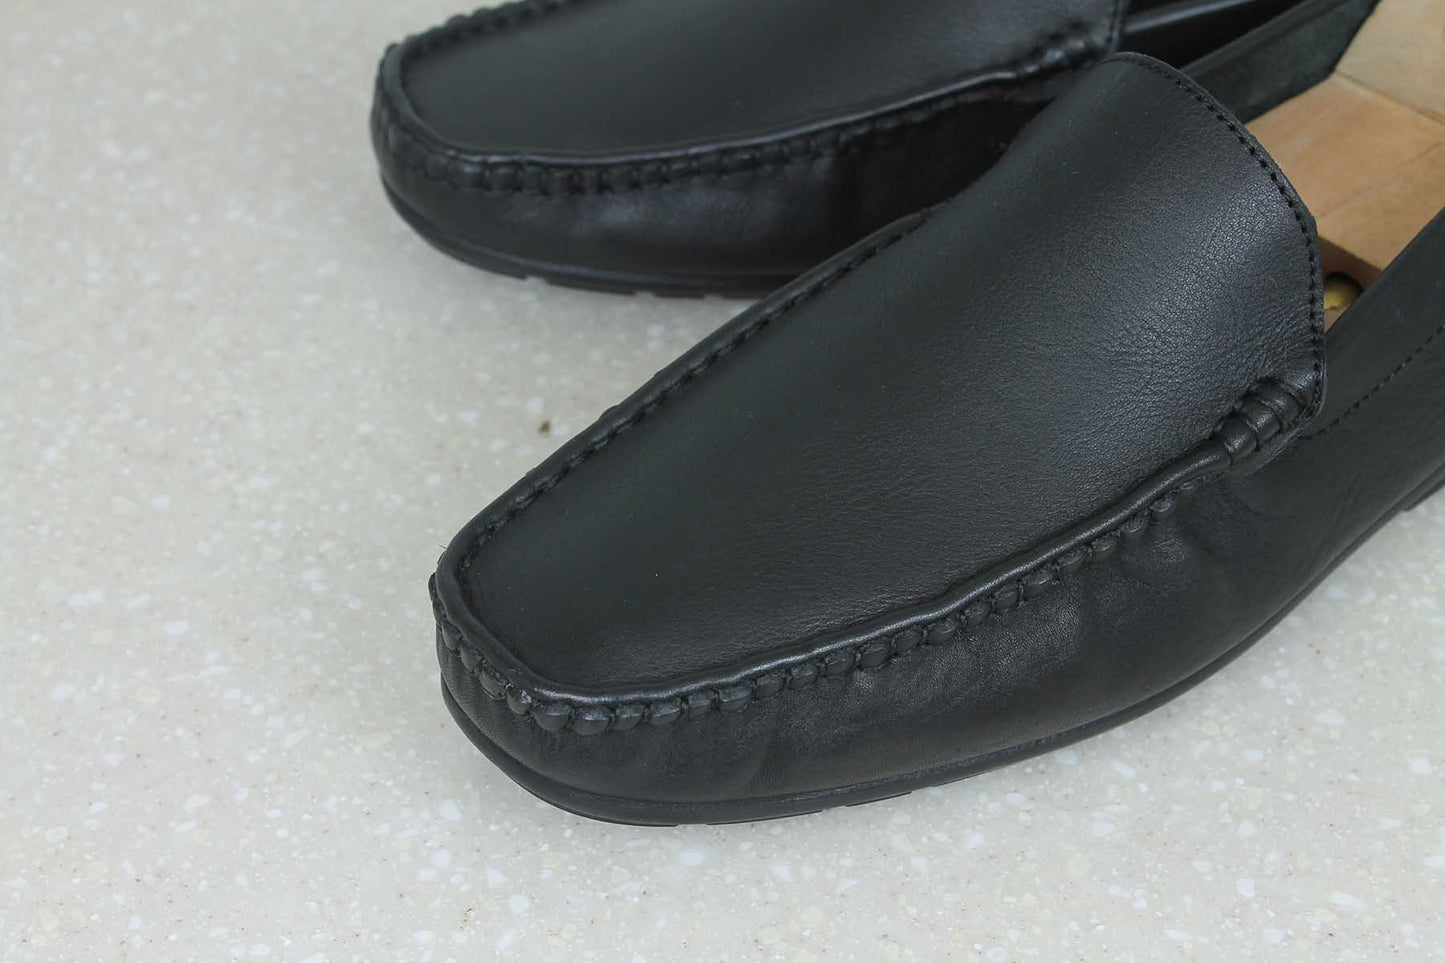 Privo Flexi Driving Shoe-Black For Men